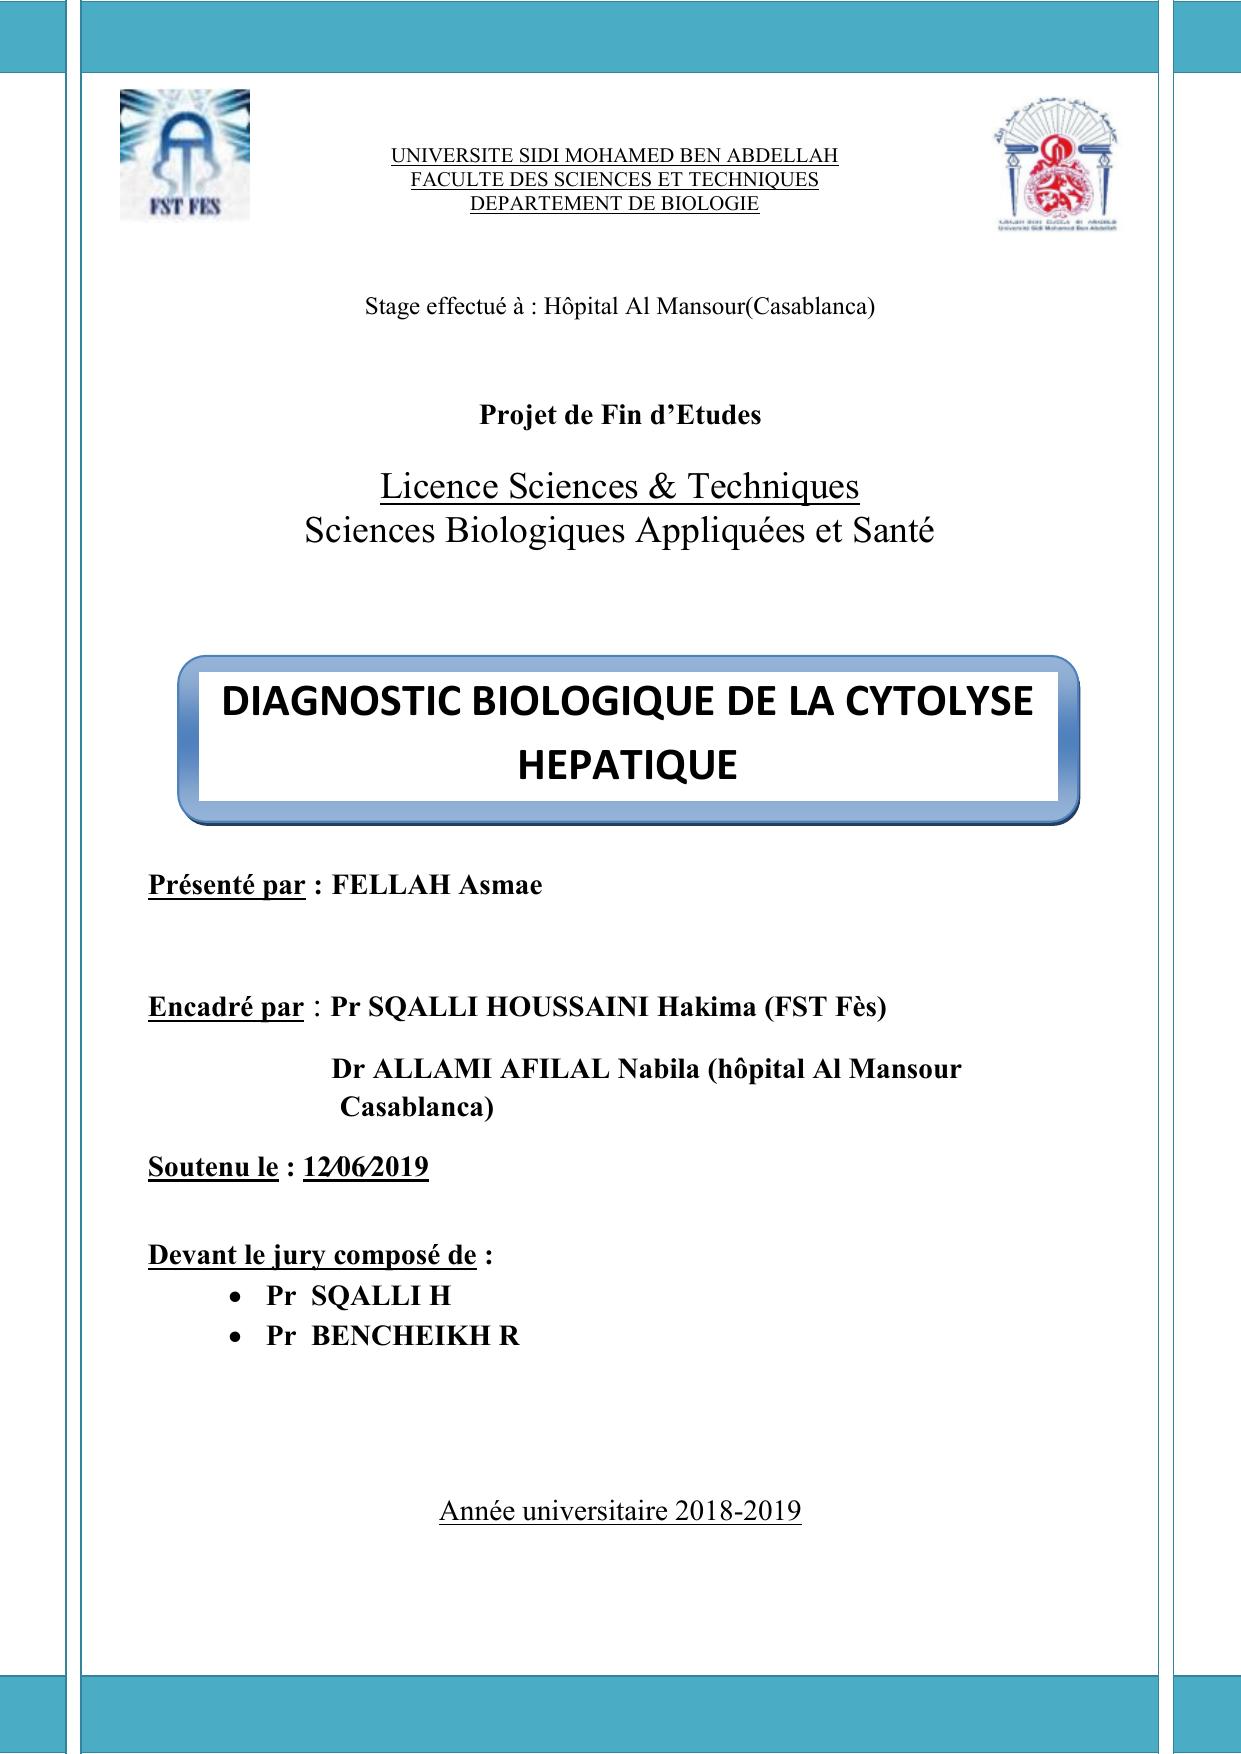 DIAGNOSTIC BIOLOGIQUE DE LA CYTOLYSE HEPATIQUE